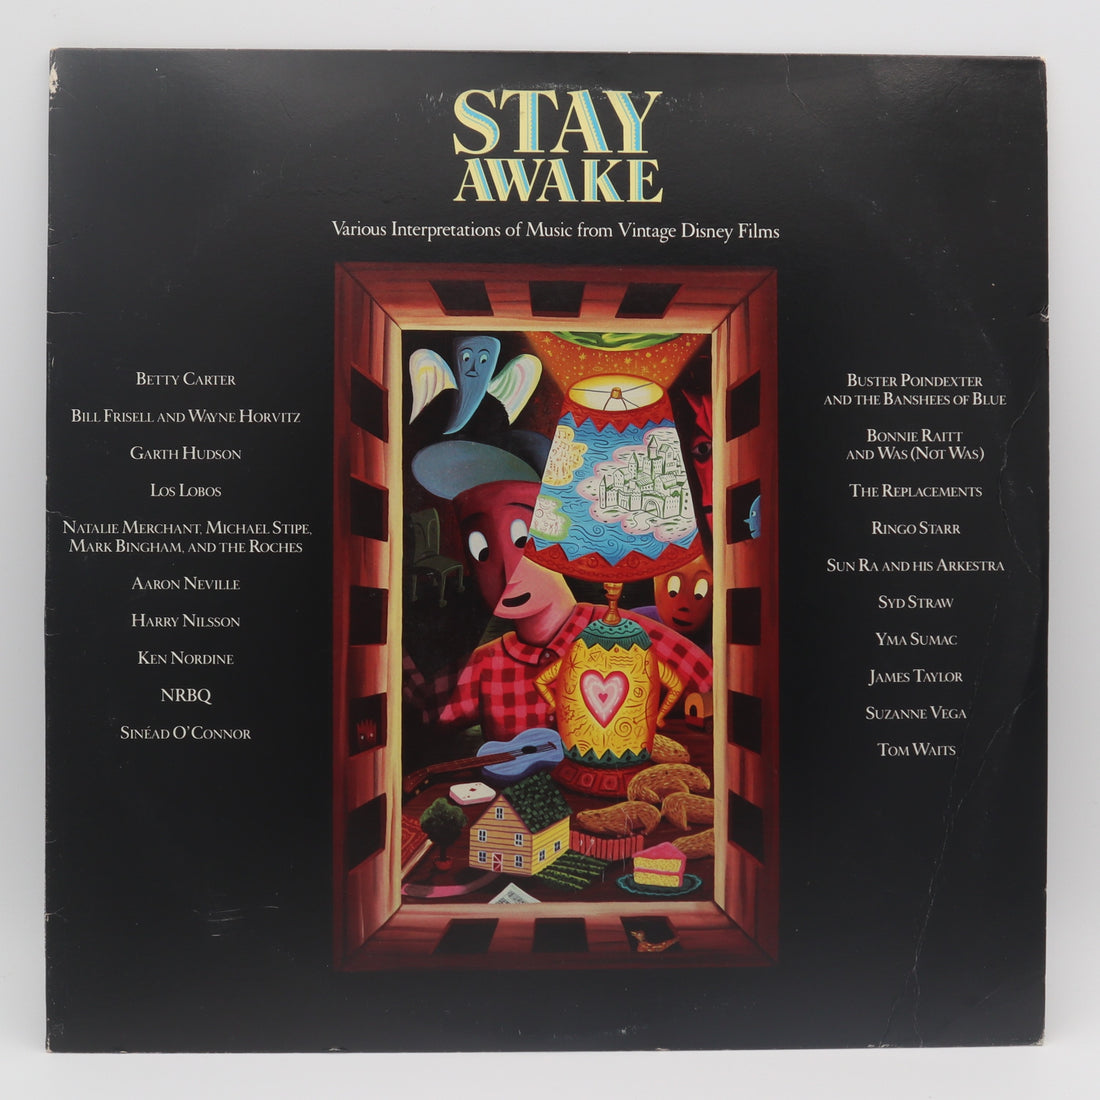 Stay Awake (Various Interpretations of Music from Vintage Disney Films)